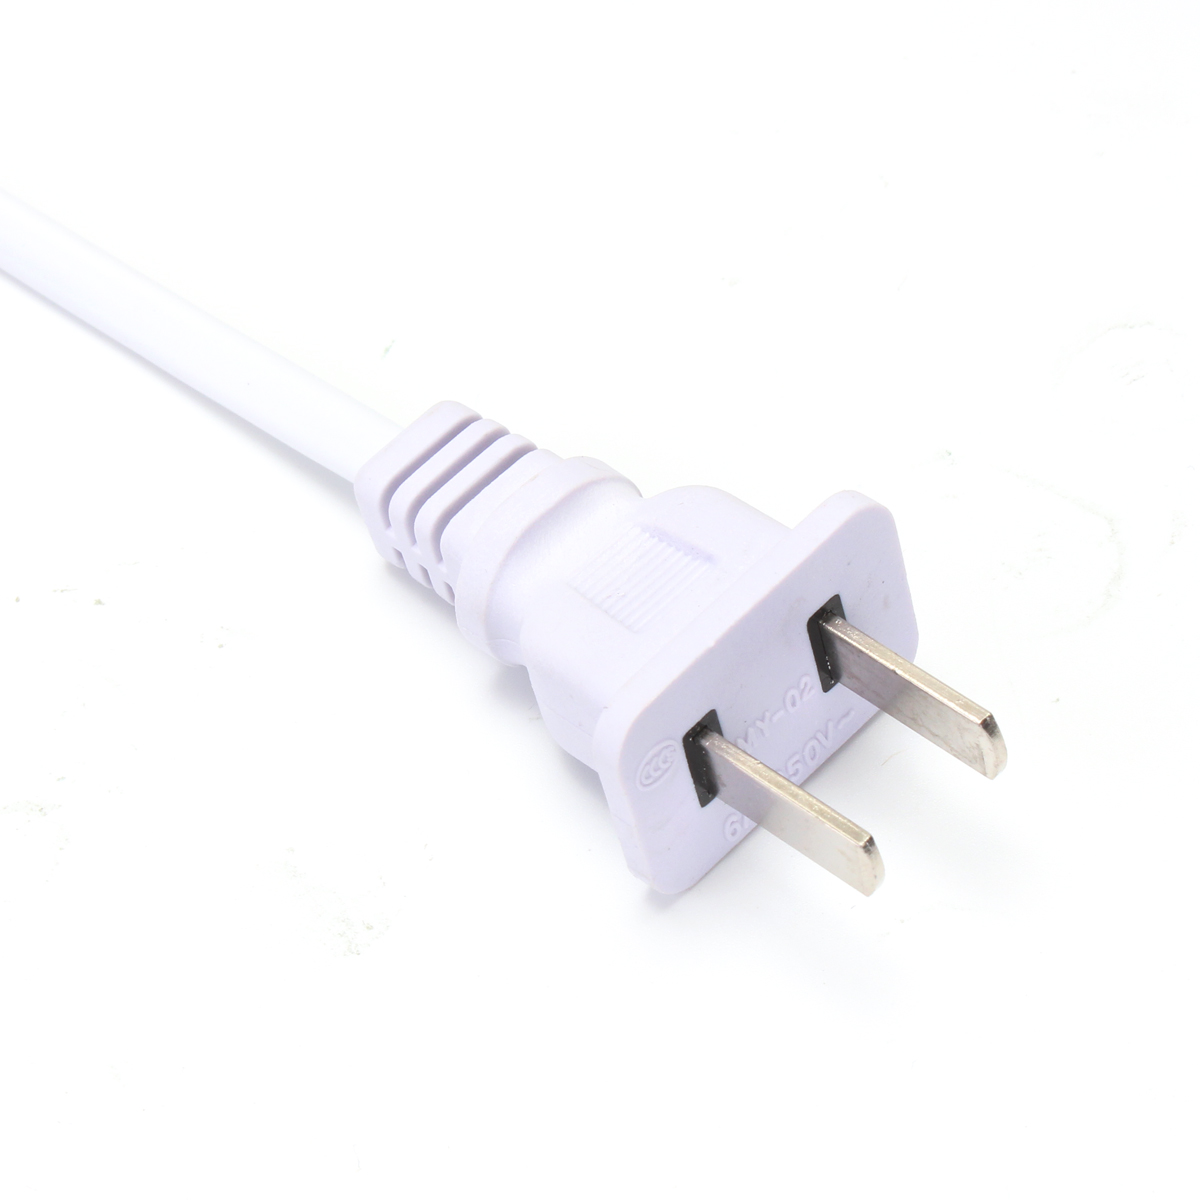 10CM-E27-Flexible-Bulb-Adapter-Lampholder-Socket-with-Clip-Dimming-Switch-EU-US-Plug-for-Pet-Light-1309715